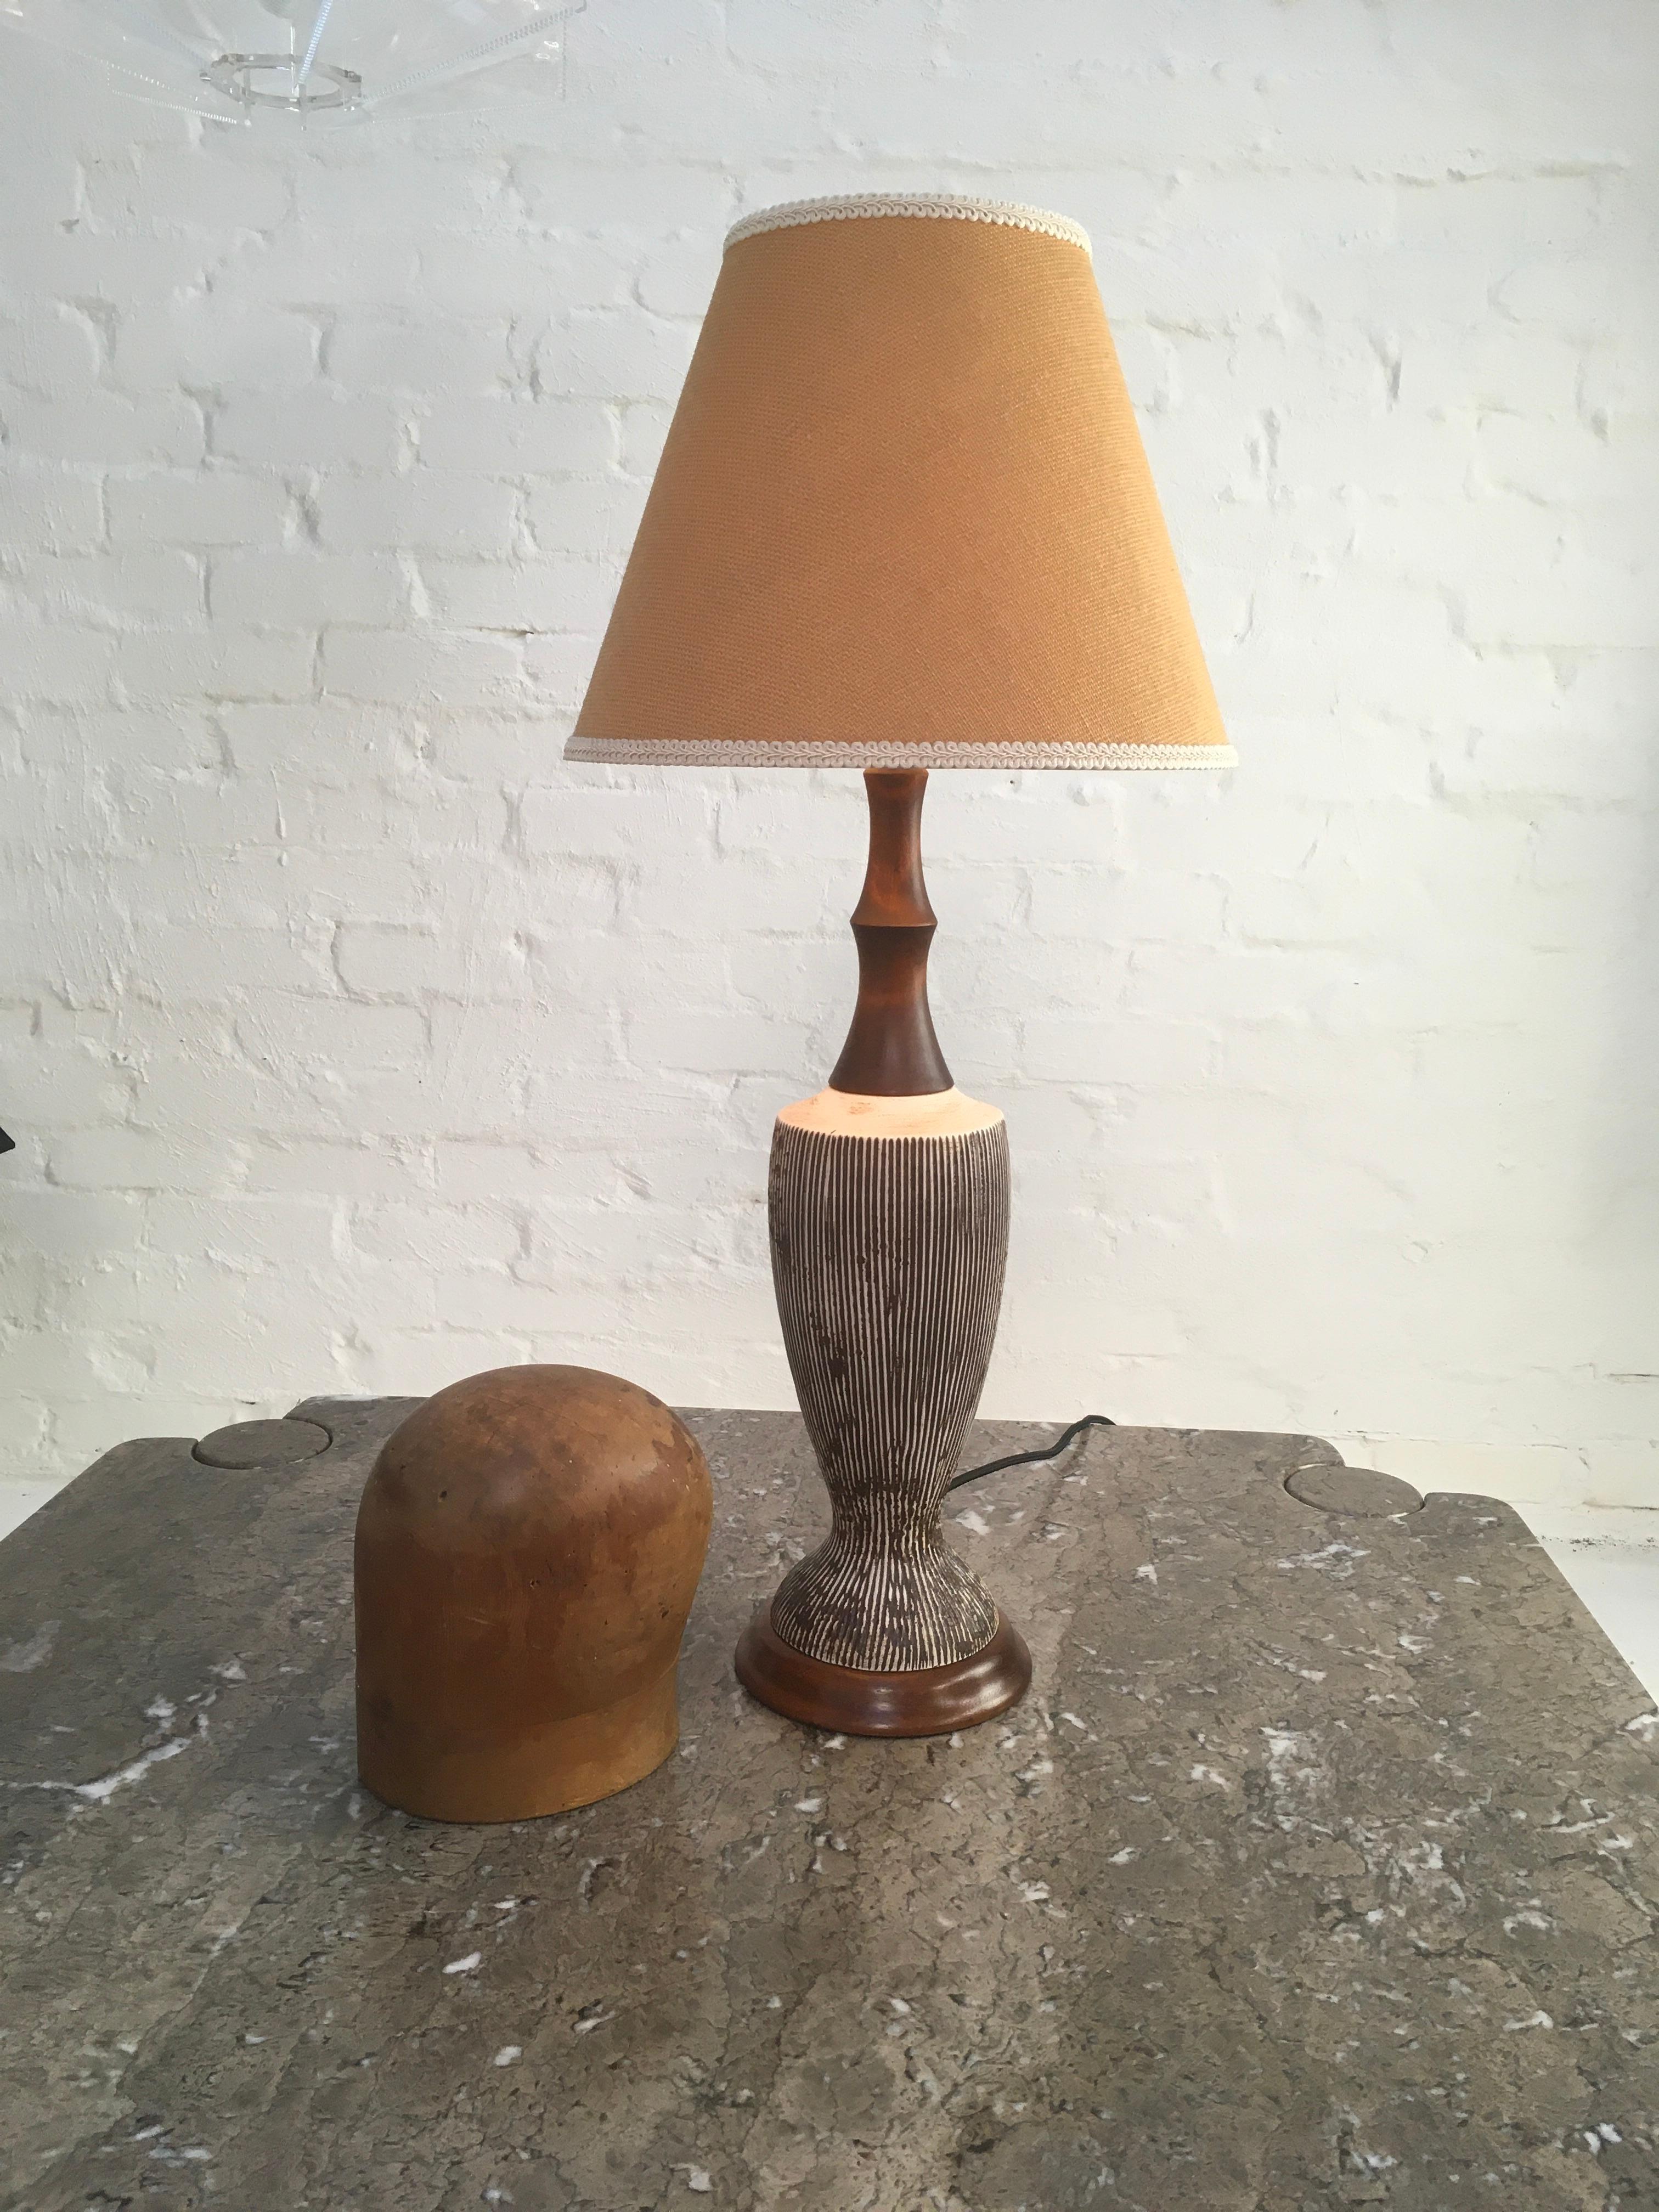 ellis pottery lamp